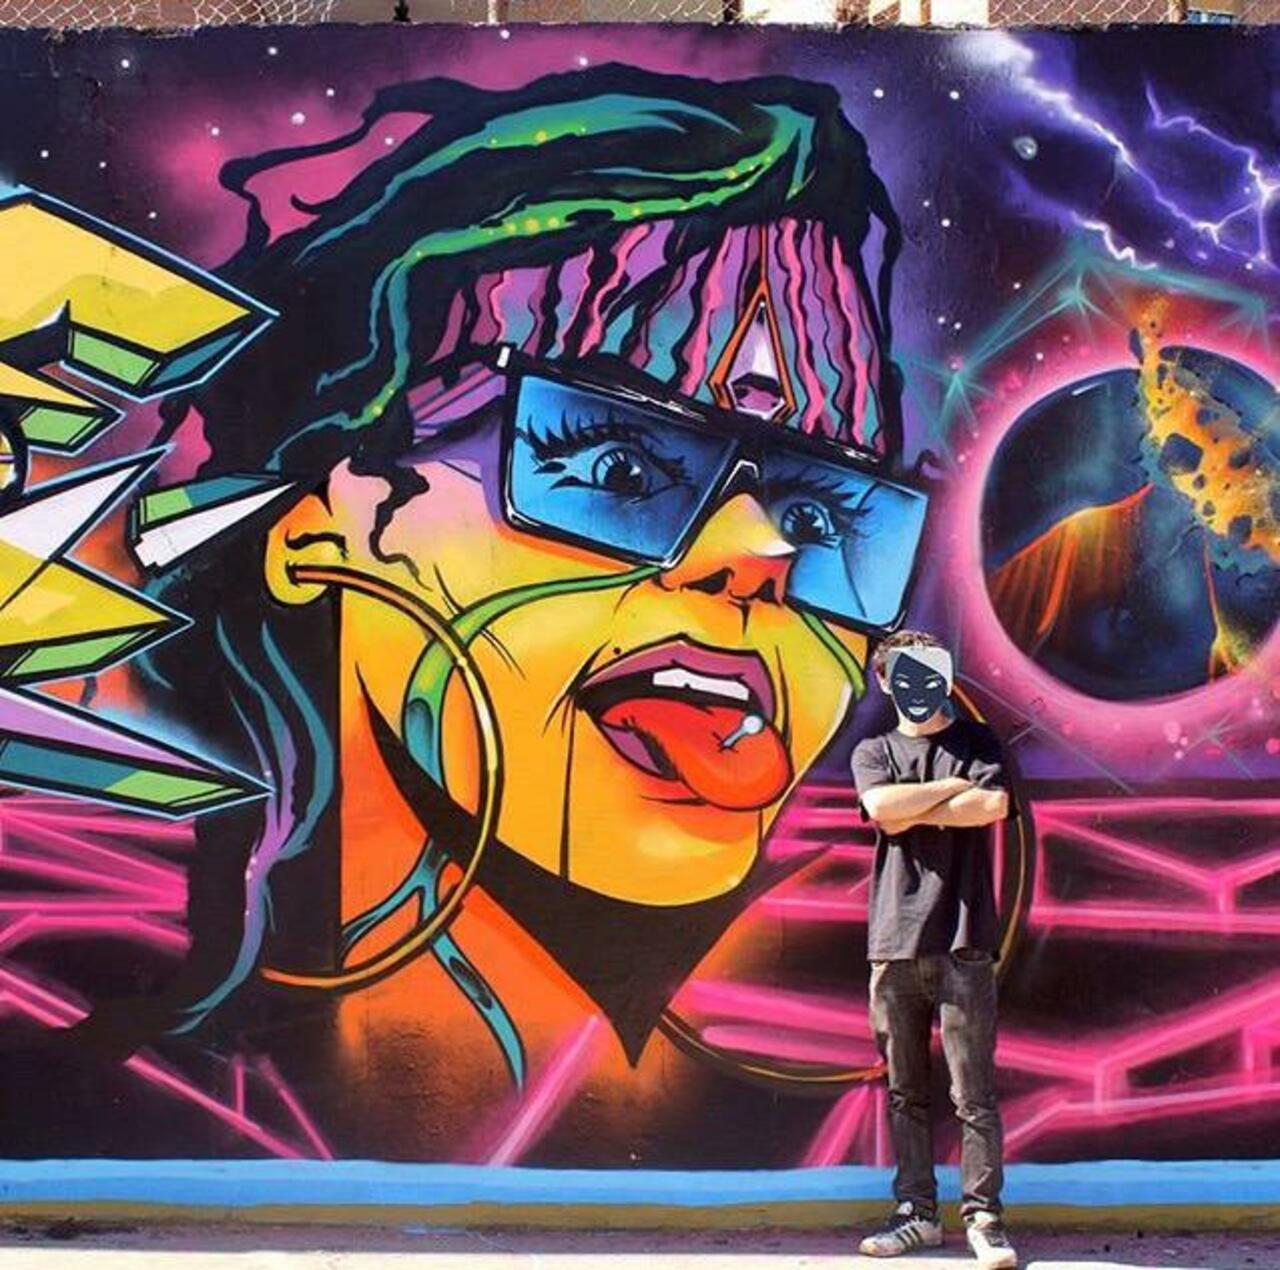 Brilliant new Street Art by the artist Jaycaes #art #graffiti #mural #streetart http://t.co/TiNYDNPlxf … … http://twitter.com/charlesjackso14/status/649568916478541825